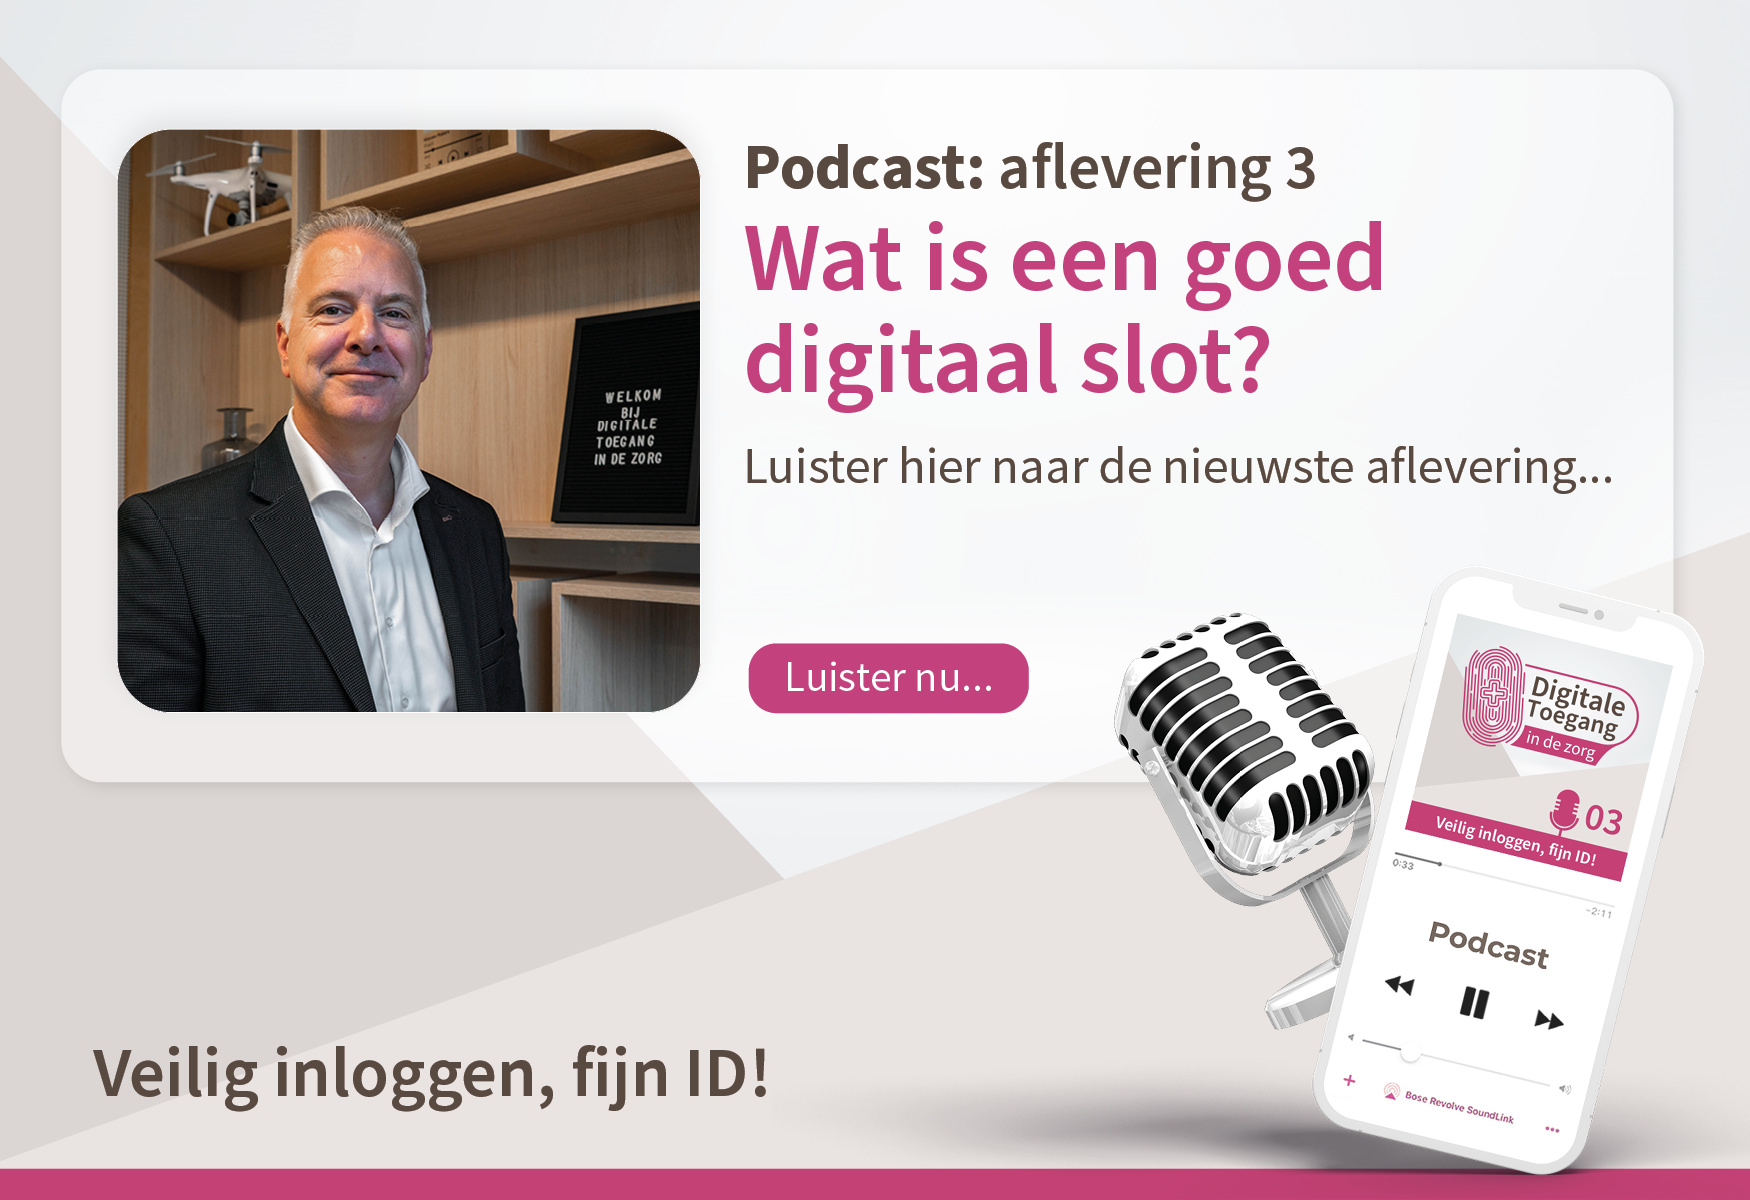 Podcastaflevering 3 - Digitale Toegang in de Zorg 